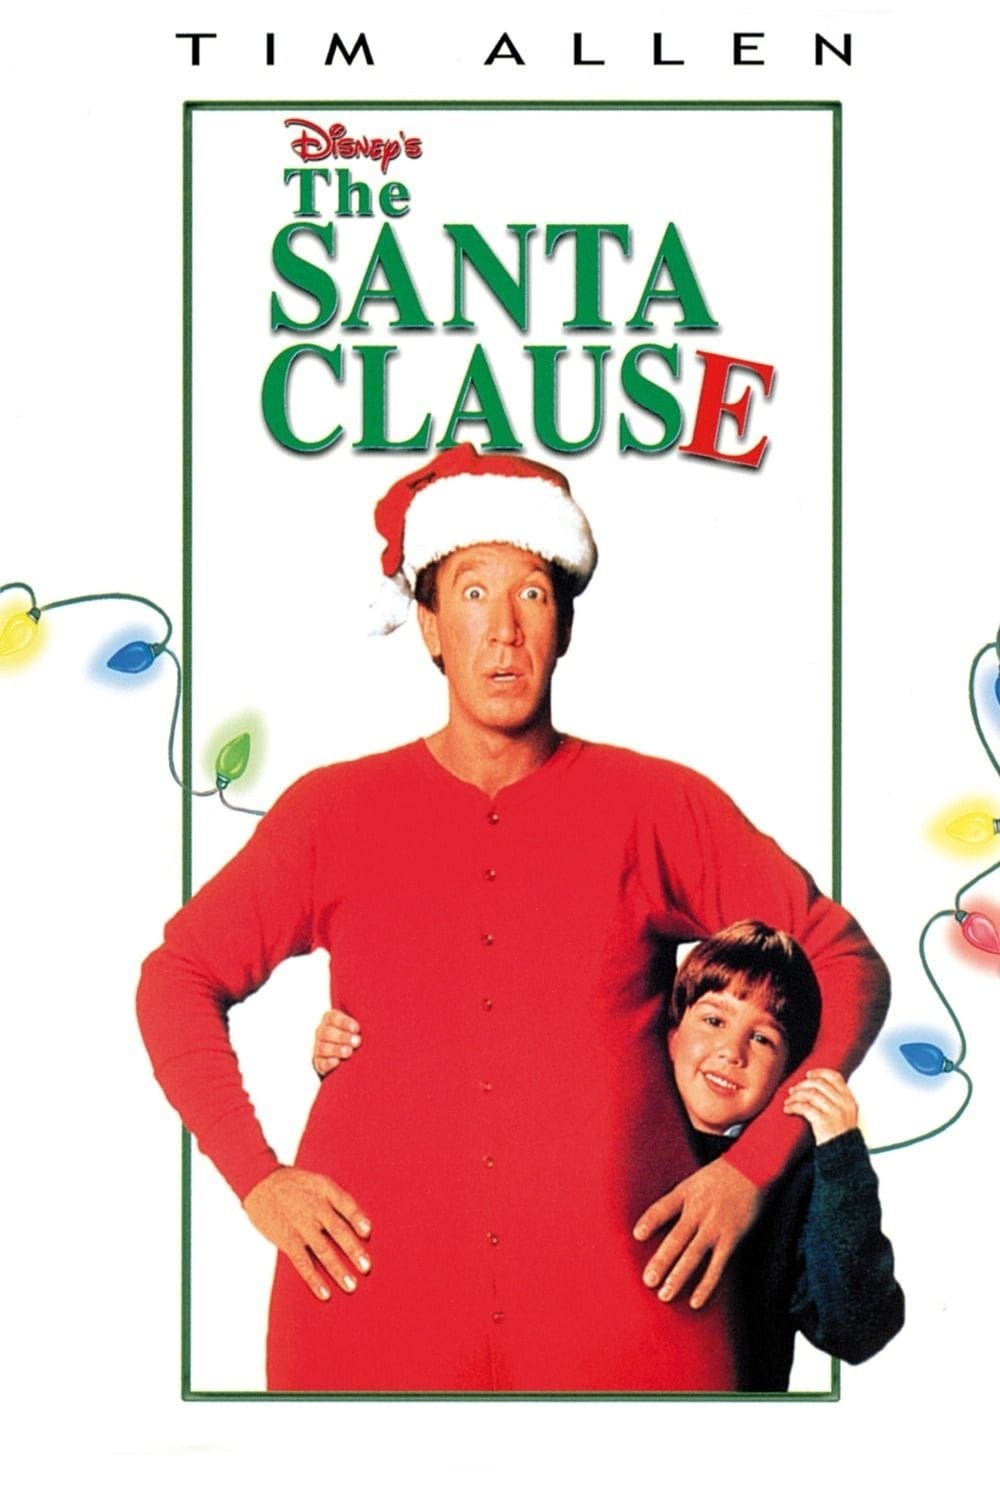 Episode 176 - The Santa Clause (1994)